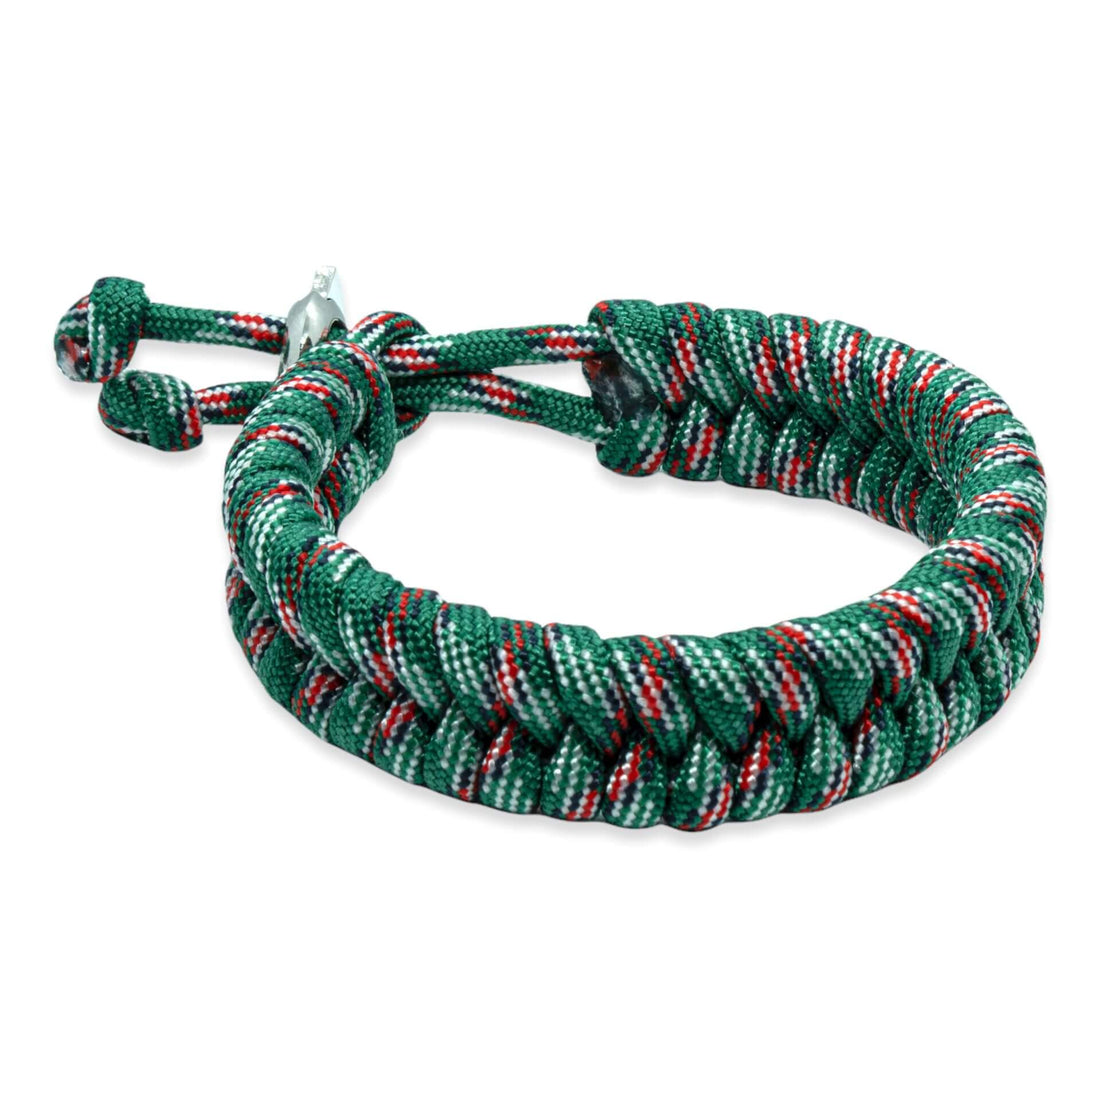 Swedish tail bracelet - Green black red blue rope colors